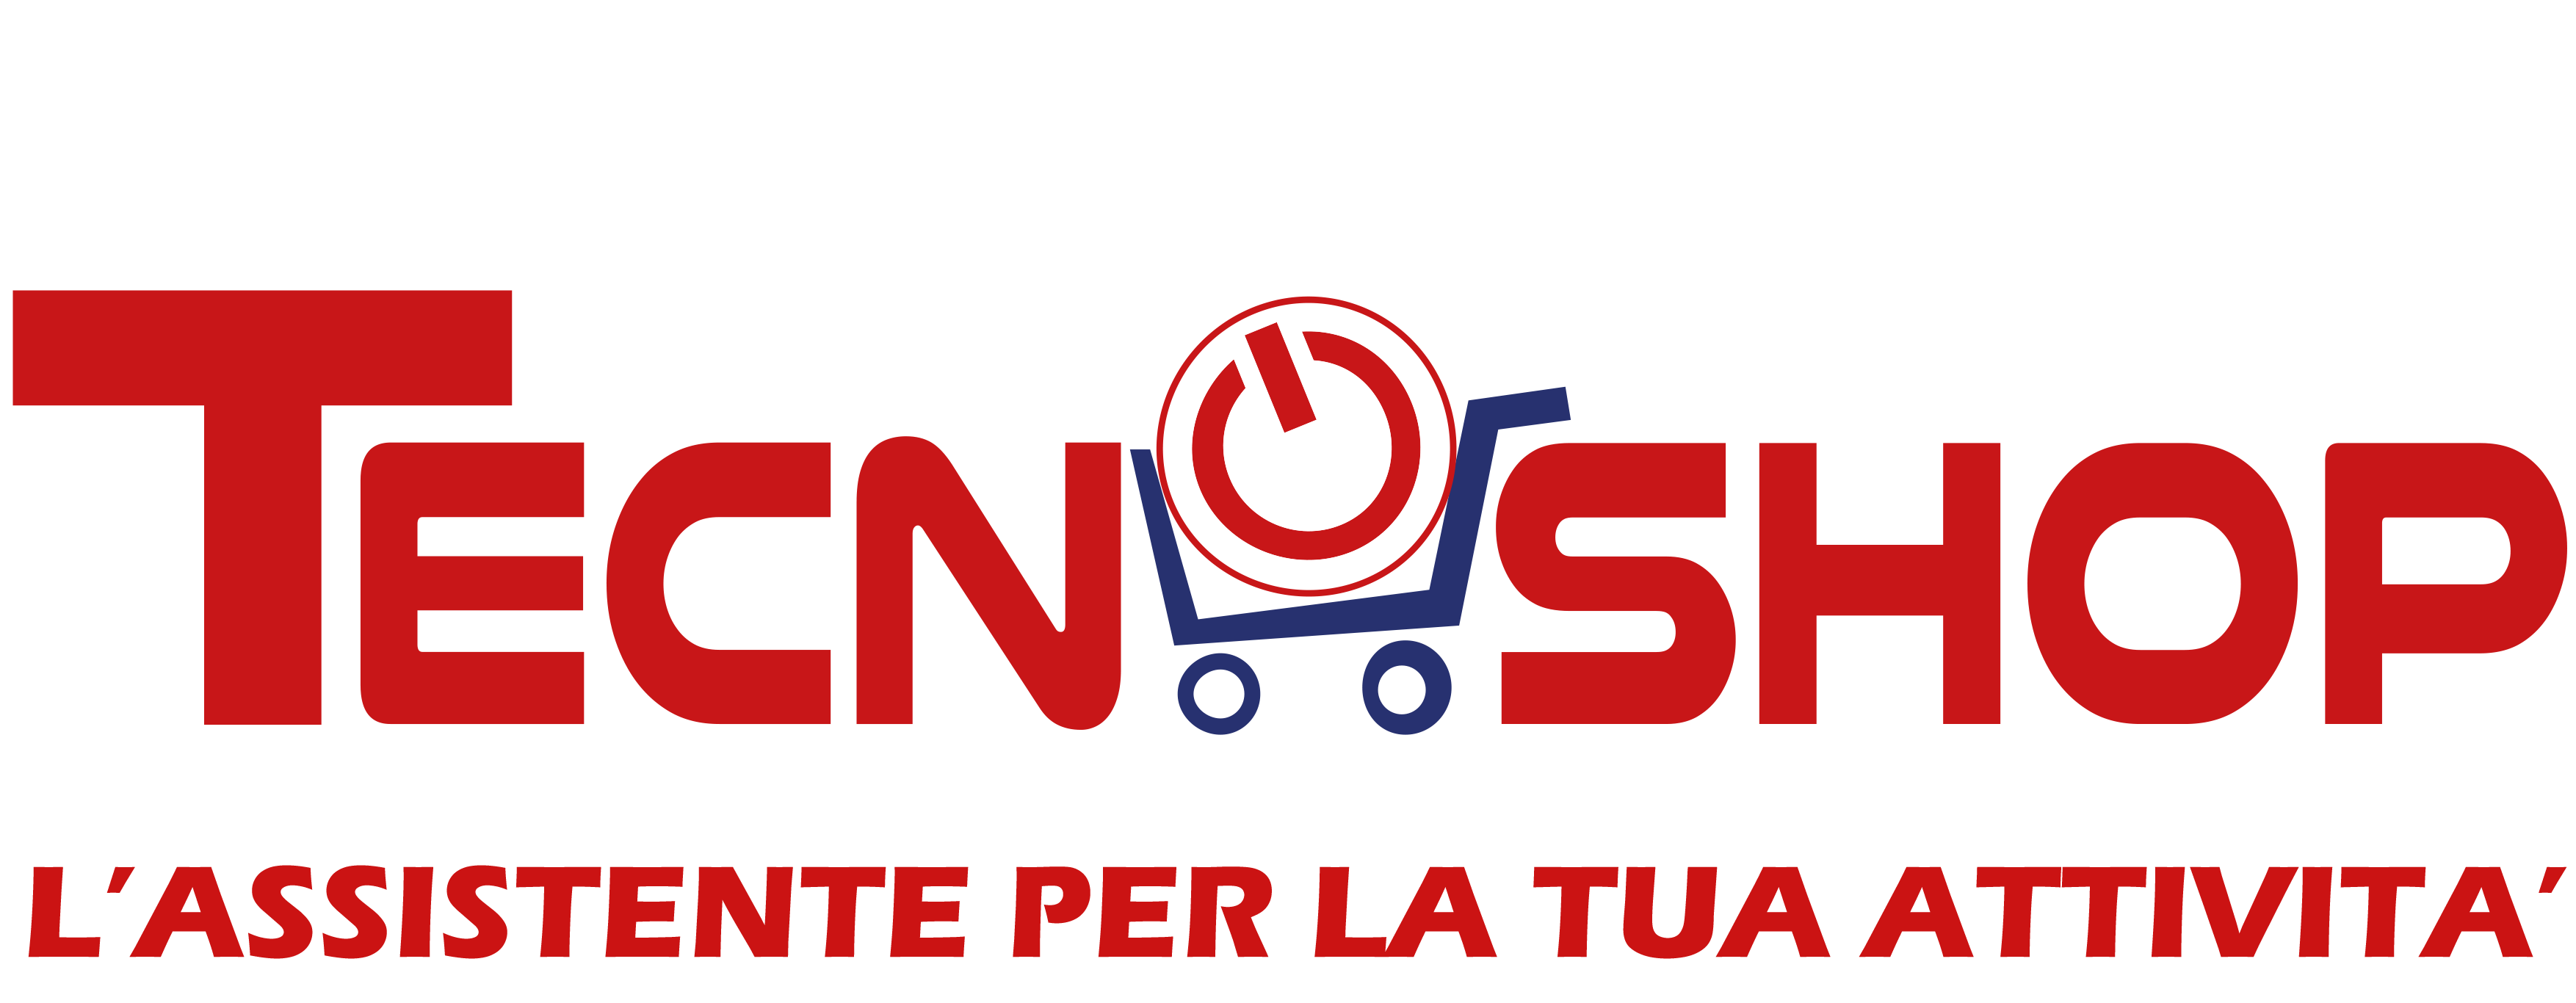 tecnoshop-logo